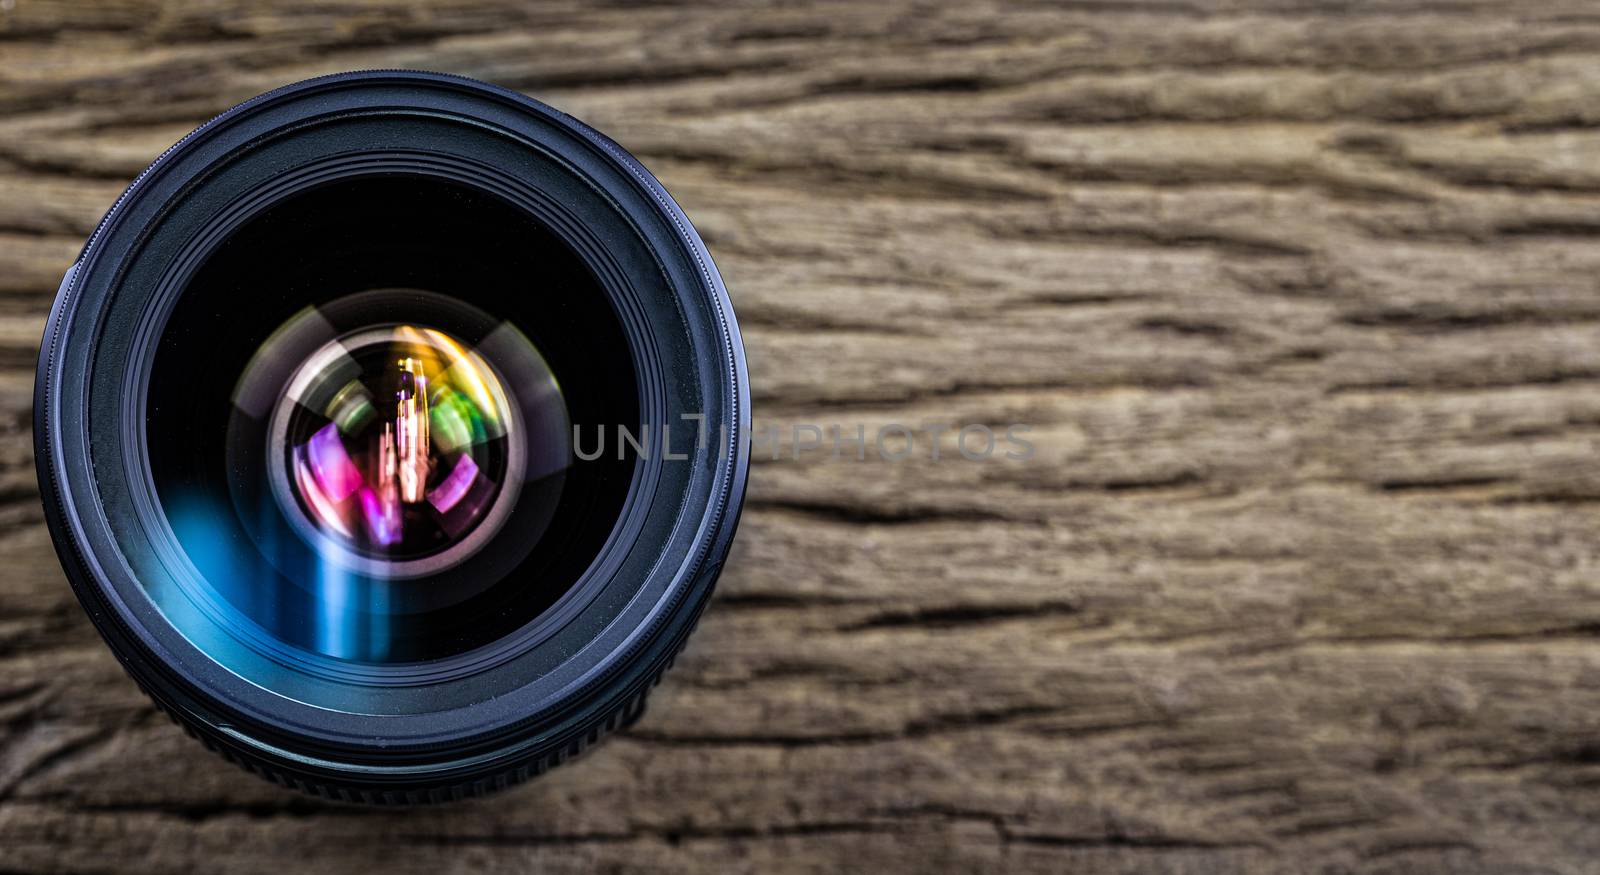 Camera lens on wood grain background by Natstocker